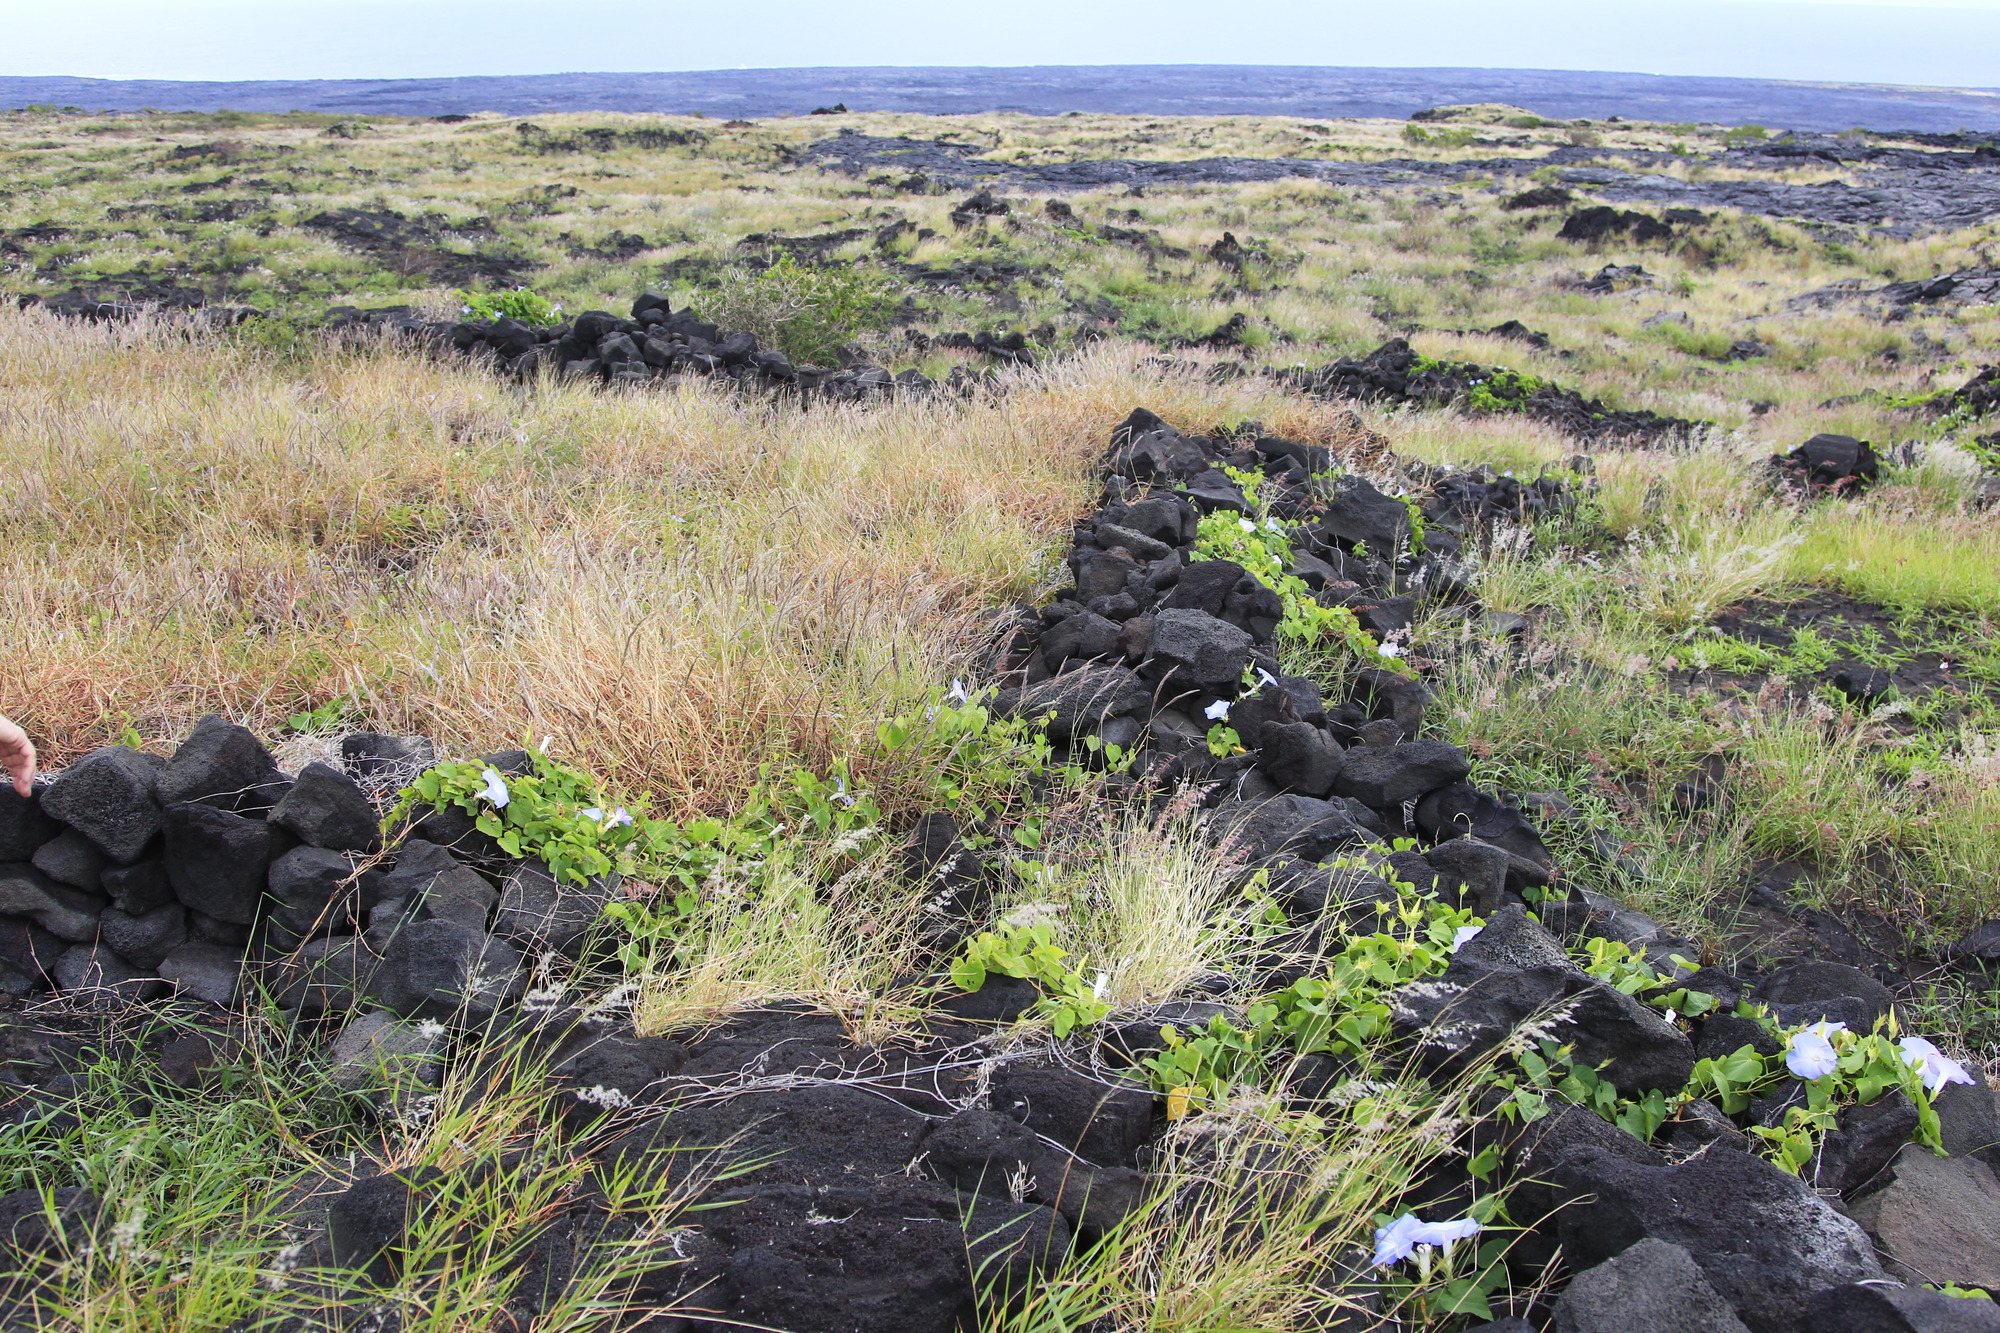 Low-lying rock walls in a grassy area